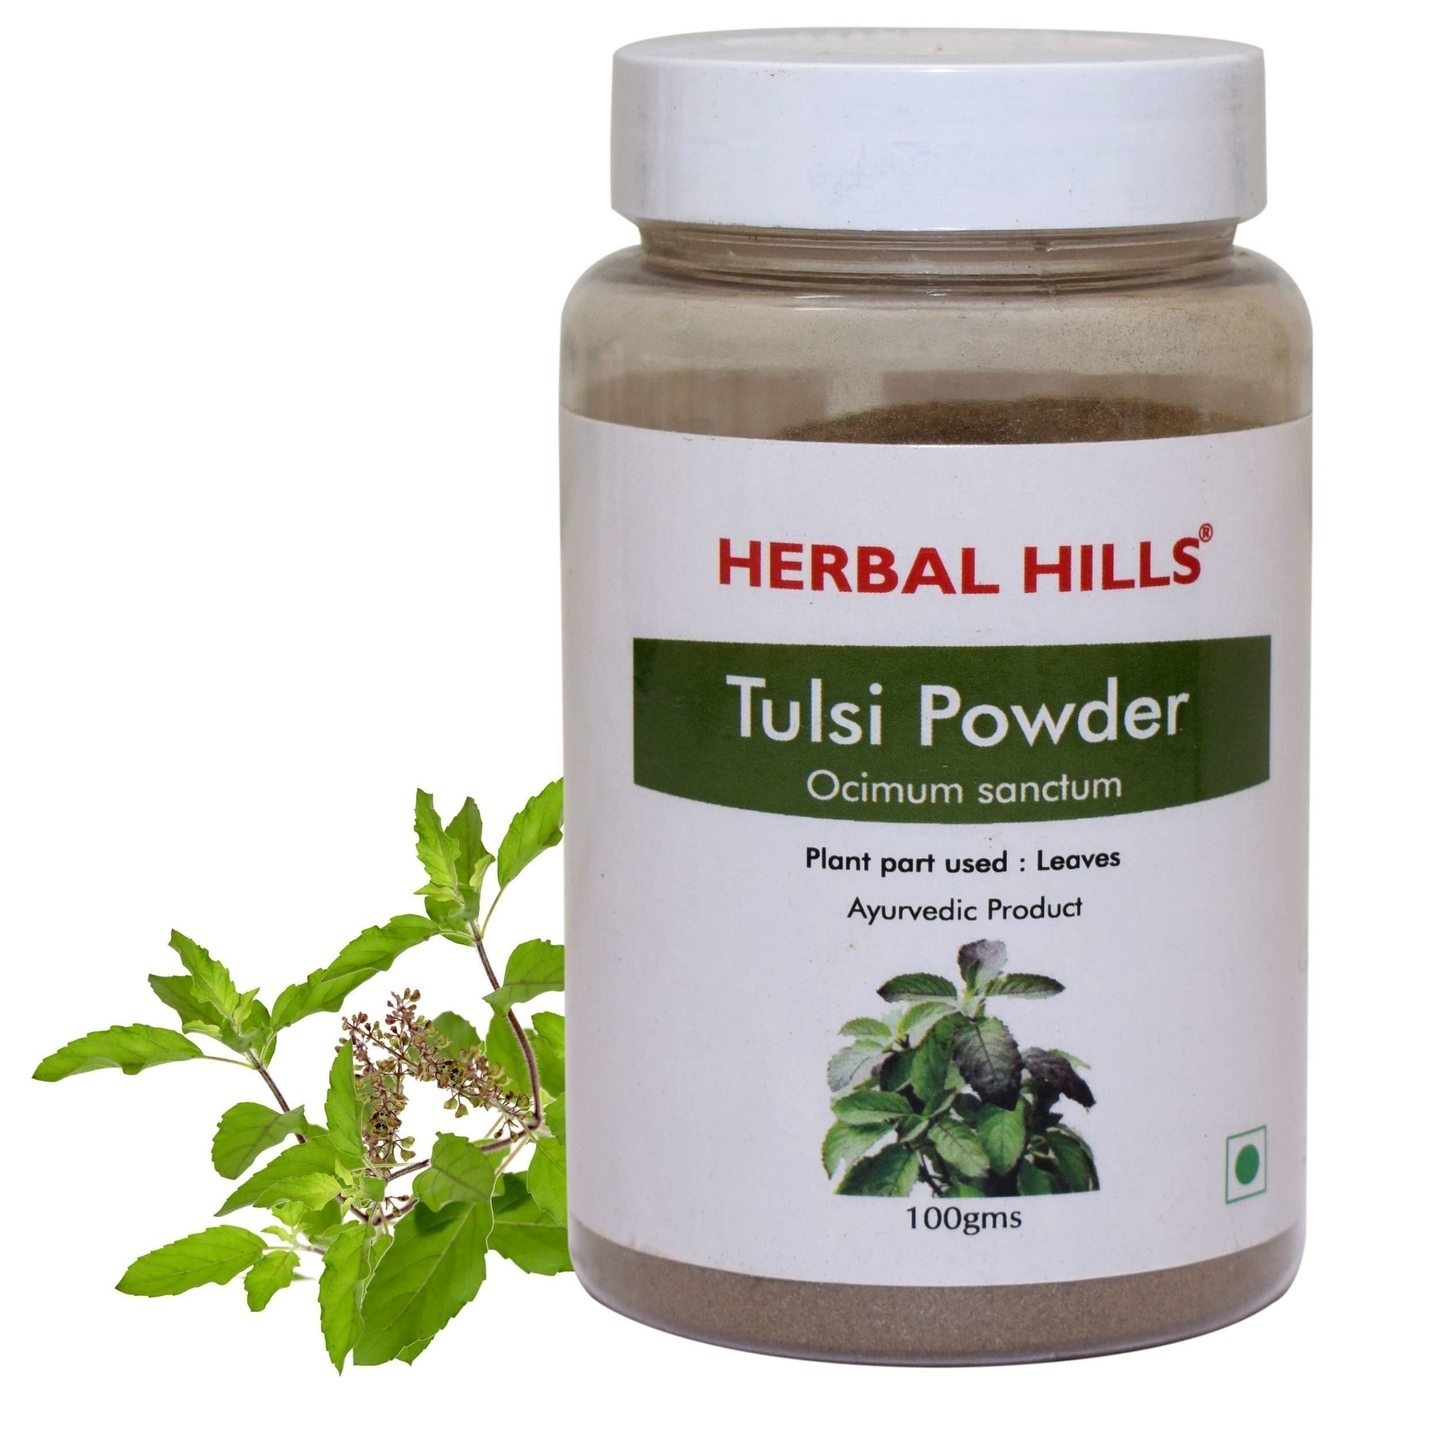 Herbal Hills Tulsi Powder 10Og Pack Of 2